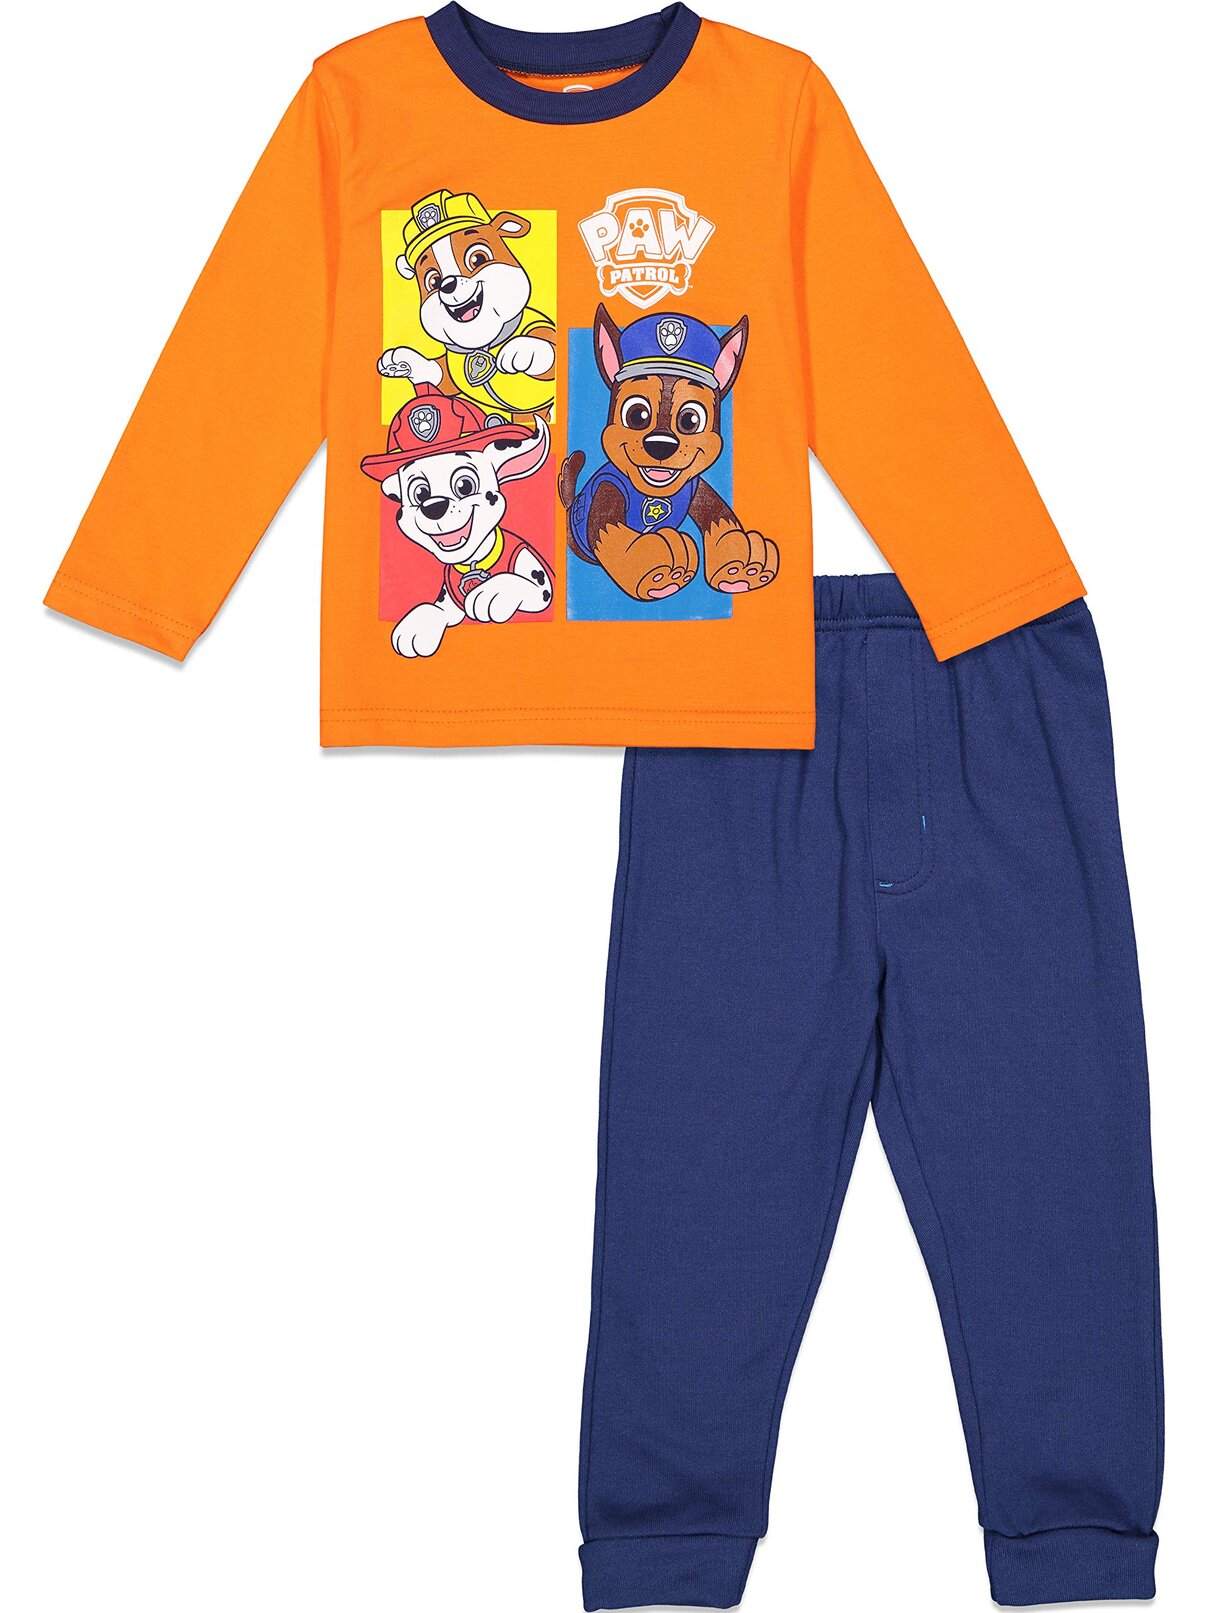 Paw Patrol T-Shirt and Fleece Pants 3 Piece Outfit Set